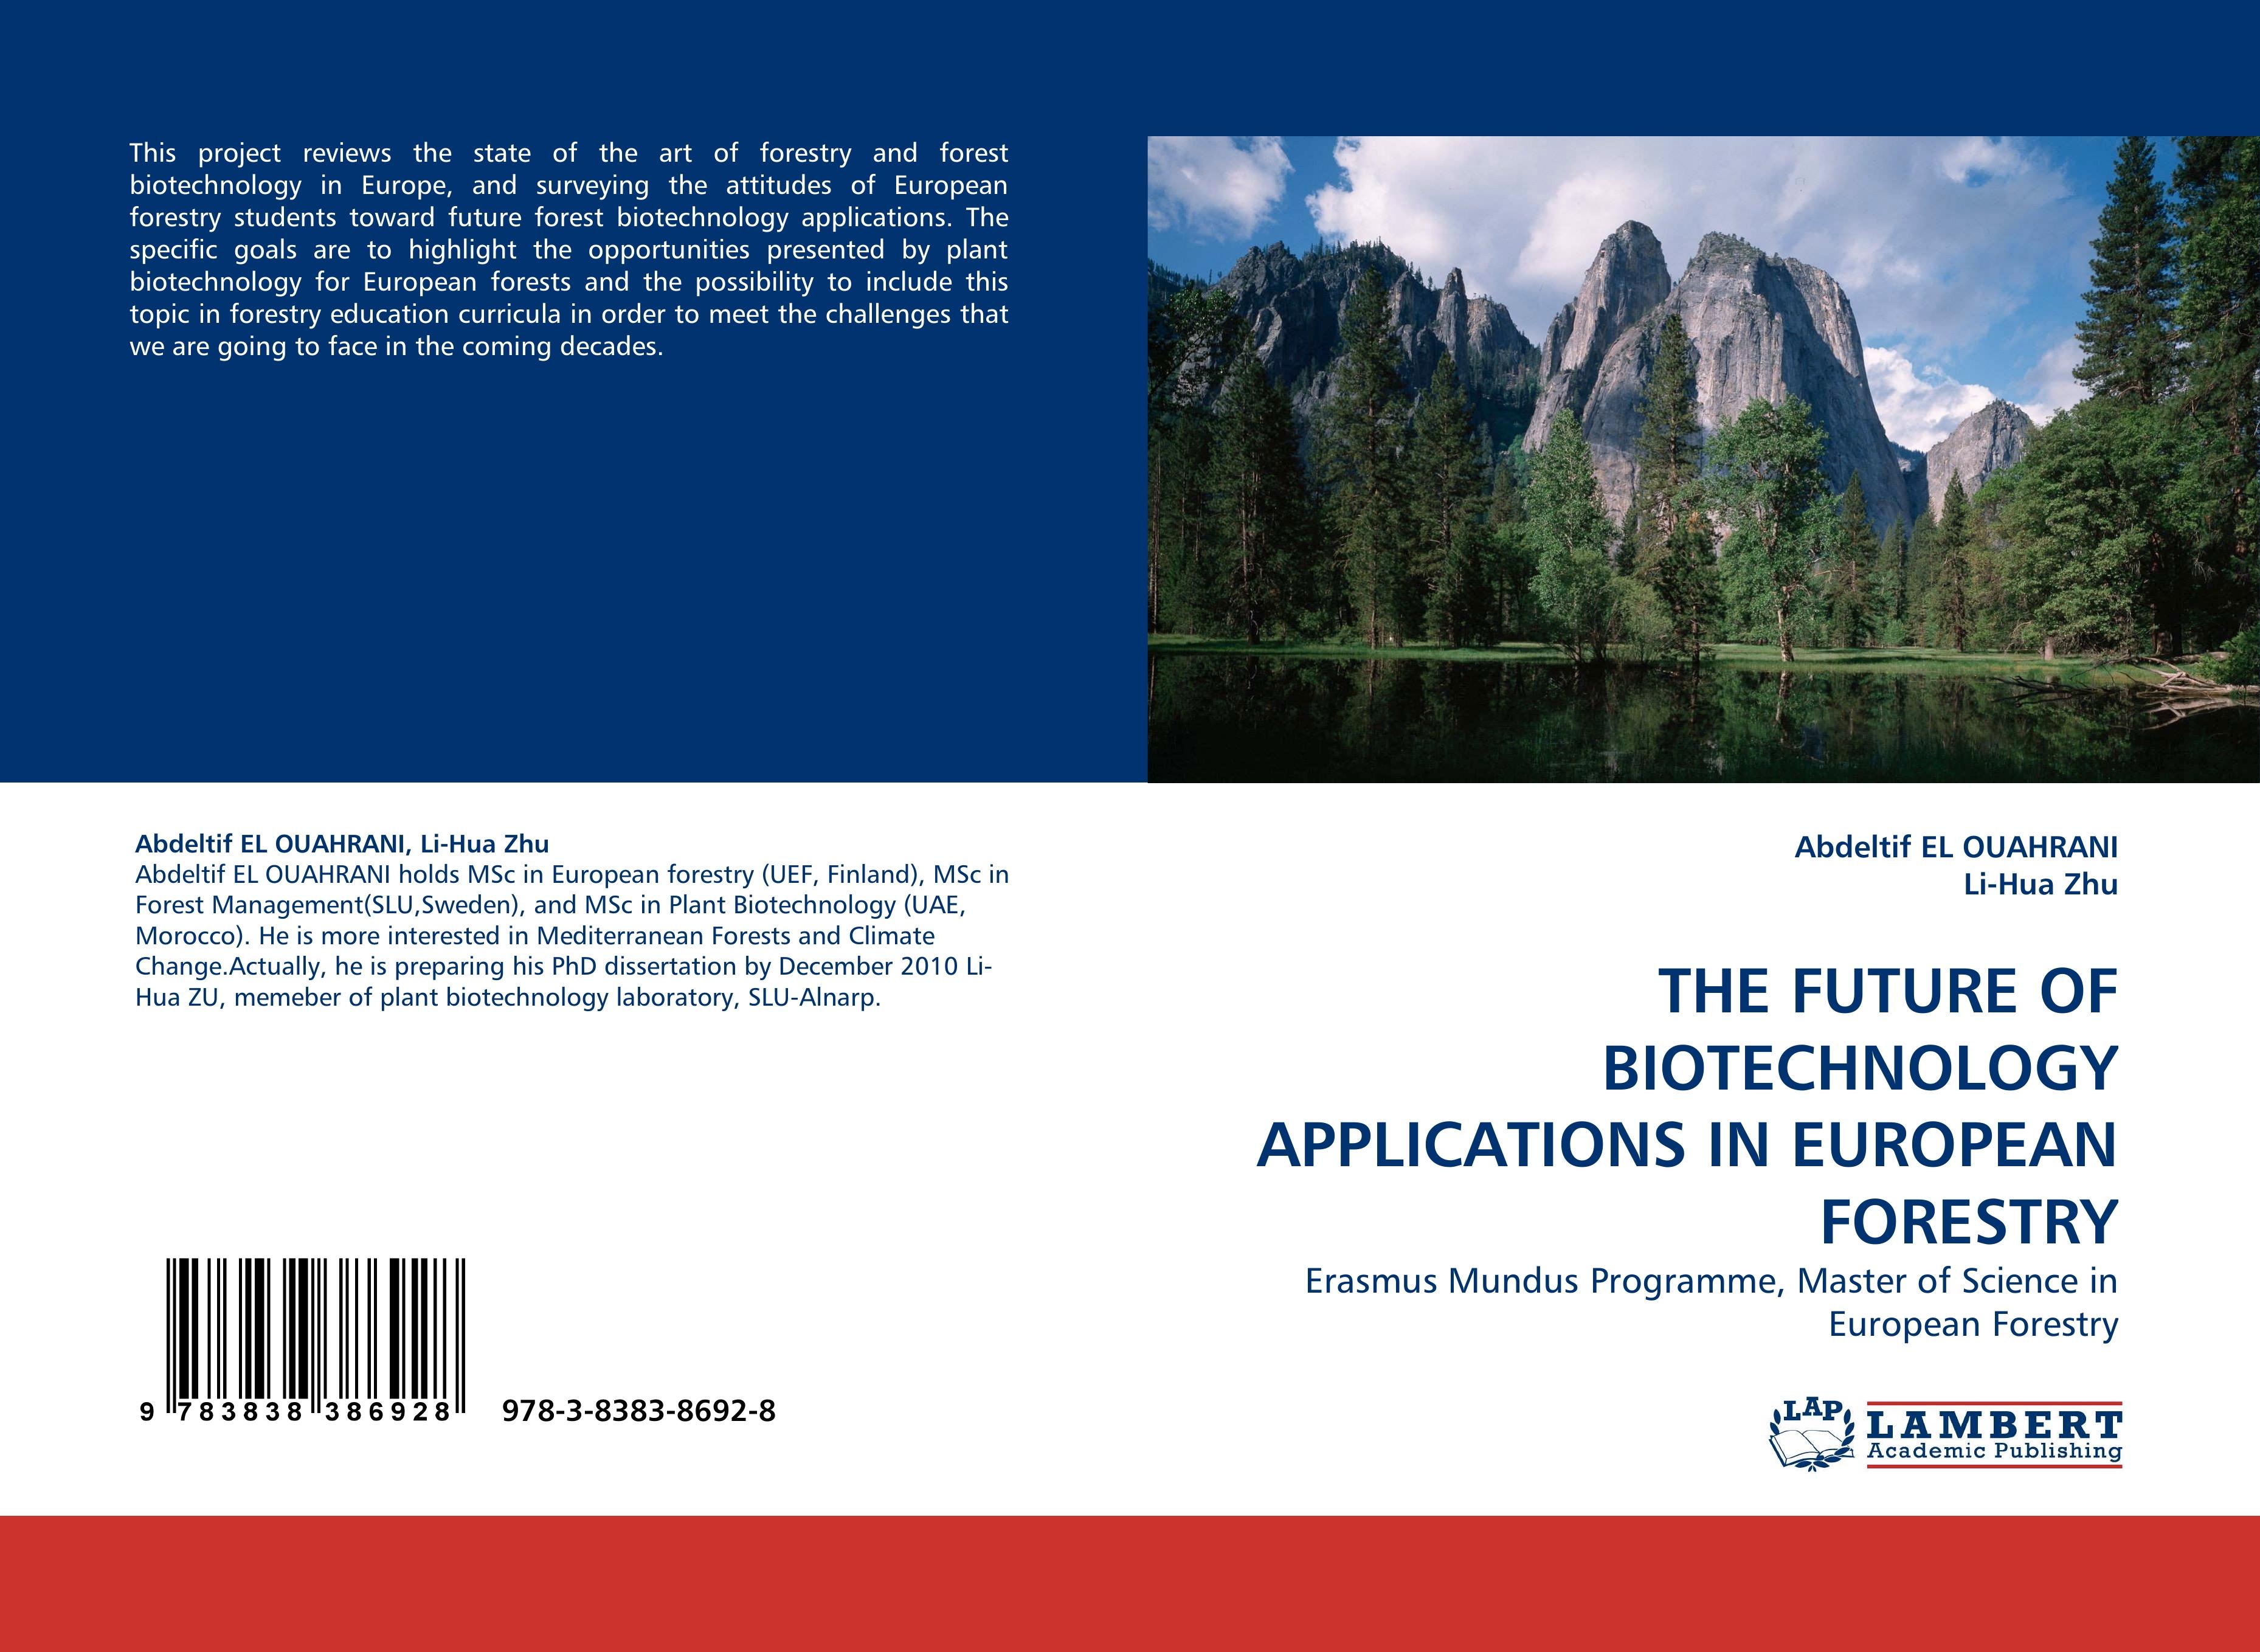 THE FUTURE OF BIOTECHNOLOGY APPLICATIONS IN EUROPEAN FORESTRY - Abdeltif EL OUAHRANI Li-Hua Zhu